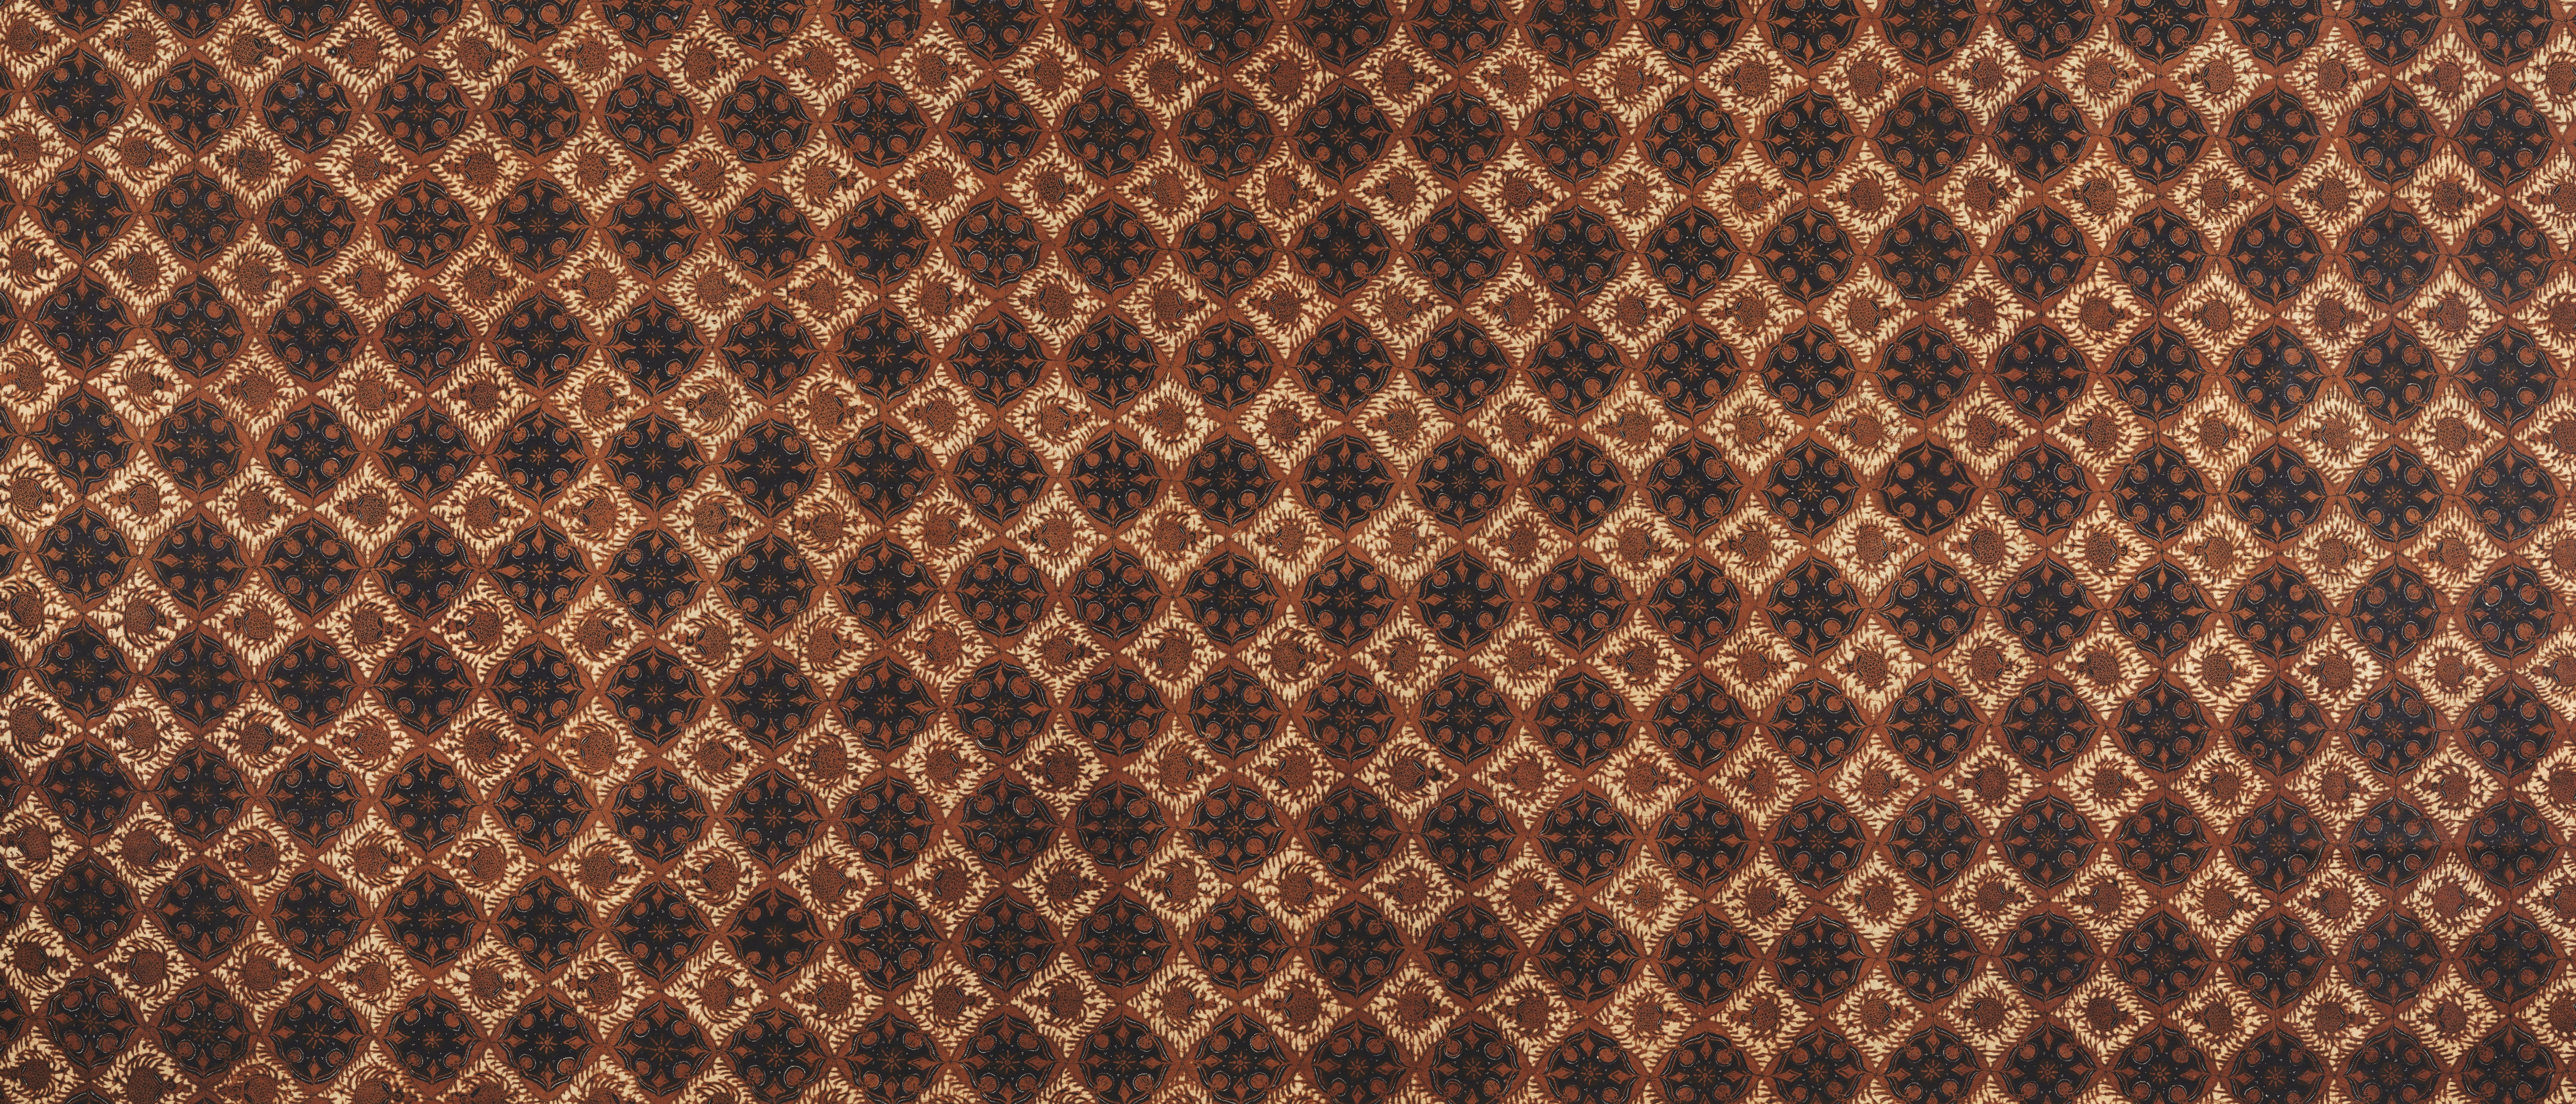 Ultra Wide Ultrawide Fabric Texture Pattern Symmetry 6119x2622